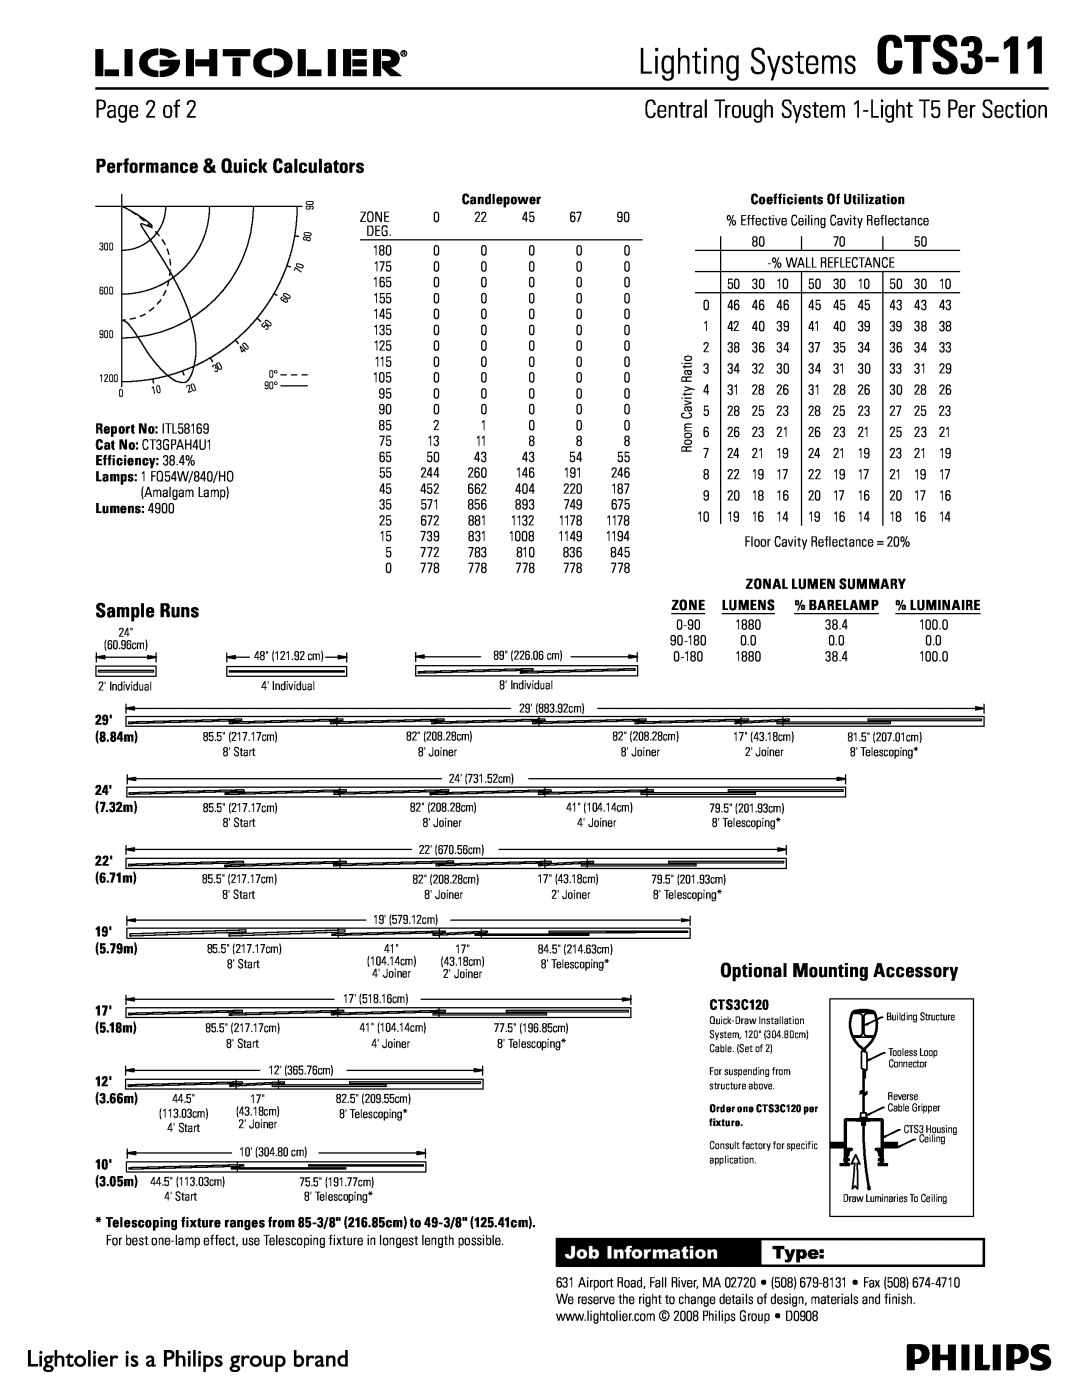 Lightolier 1BHFPG, Performance & Quick Calculators, Sample Runs, Lighting Systems CTS3-11, Job Information, Type 